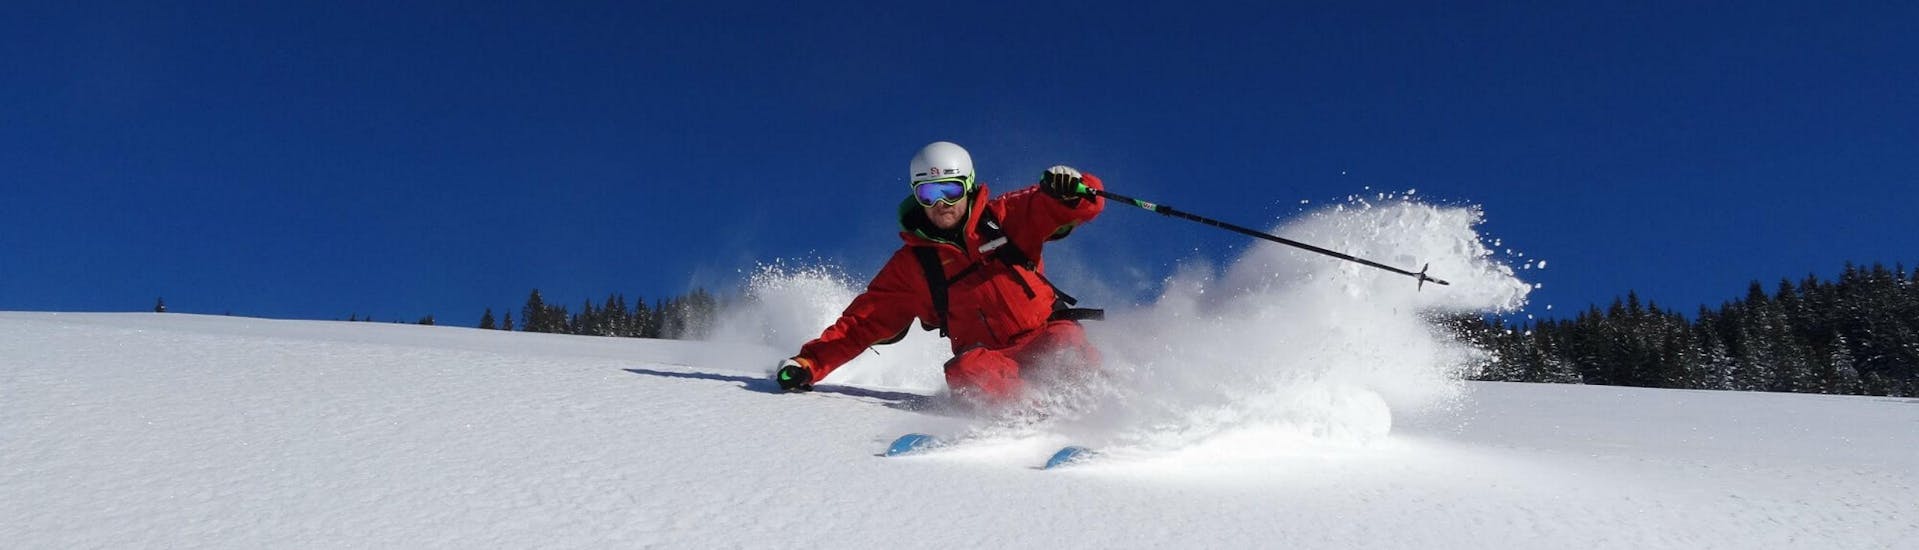 A ski instructor from the ski school S4 Snowsport Fieberbrunn is skiing through deep powder snow in the tyrolean ski resort of Fieberbrunn.